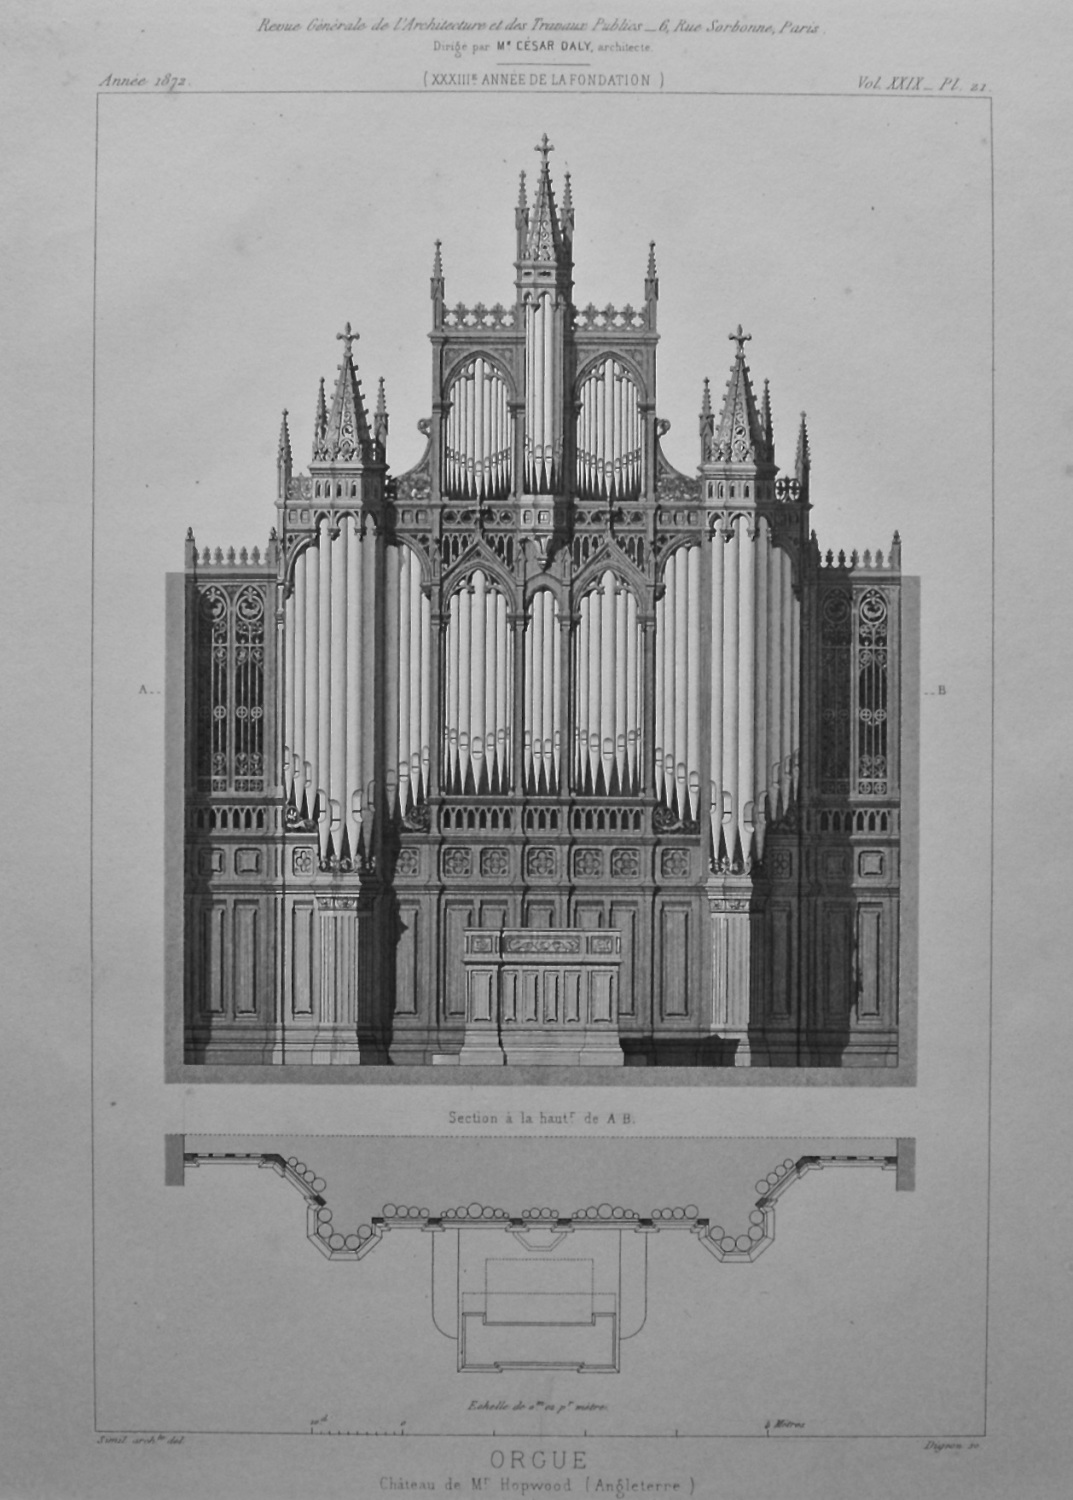 Orgue. Chateau de Mr. Hopwood (Angleterre). 1872.